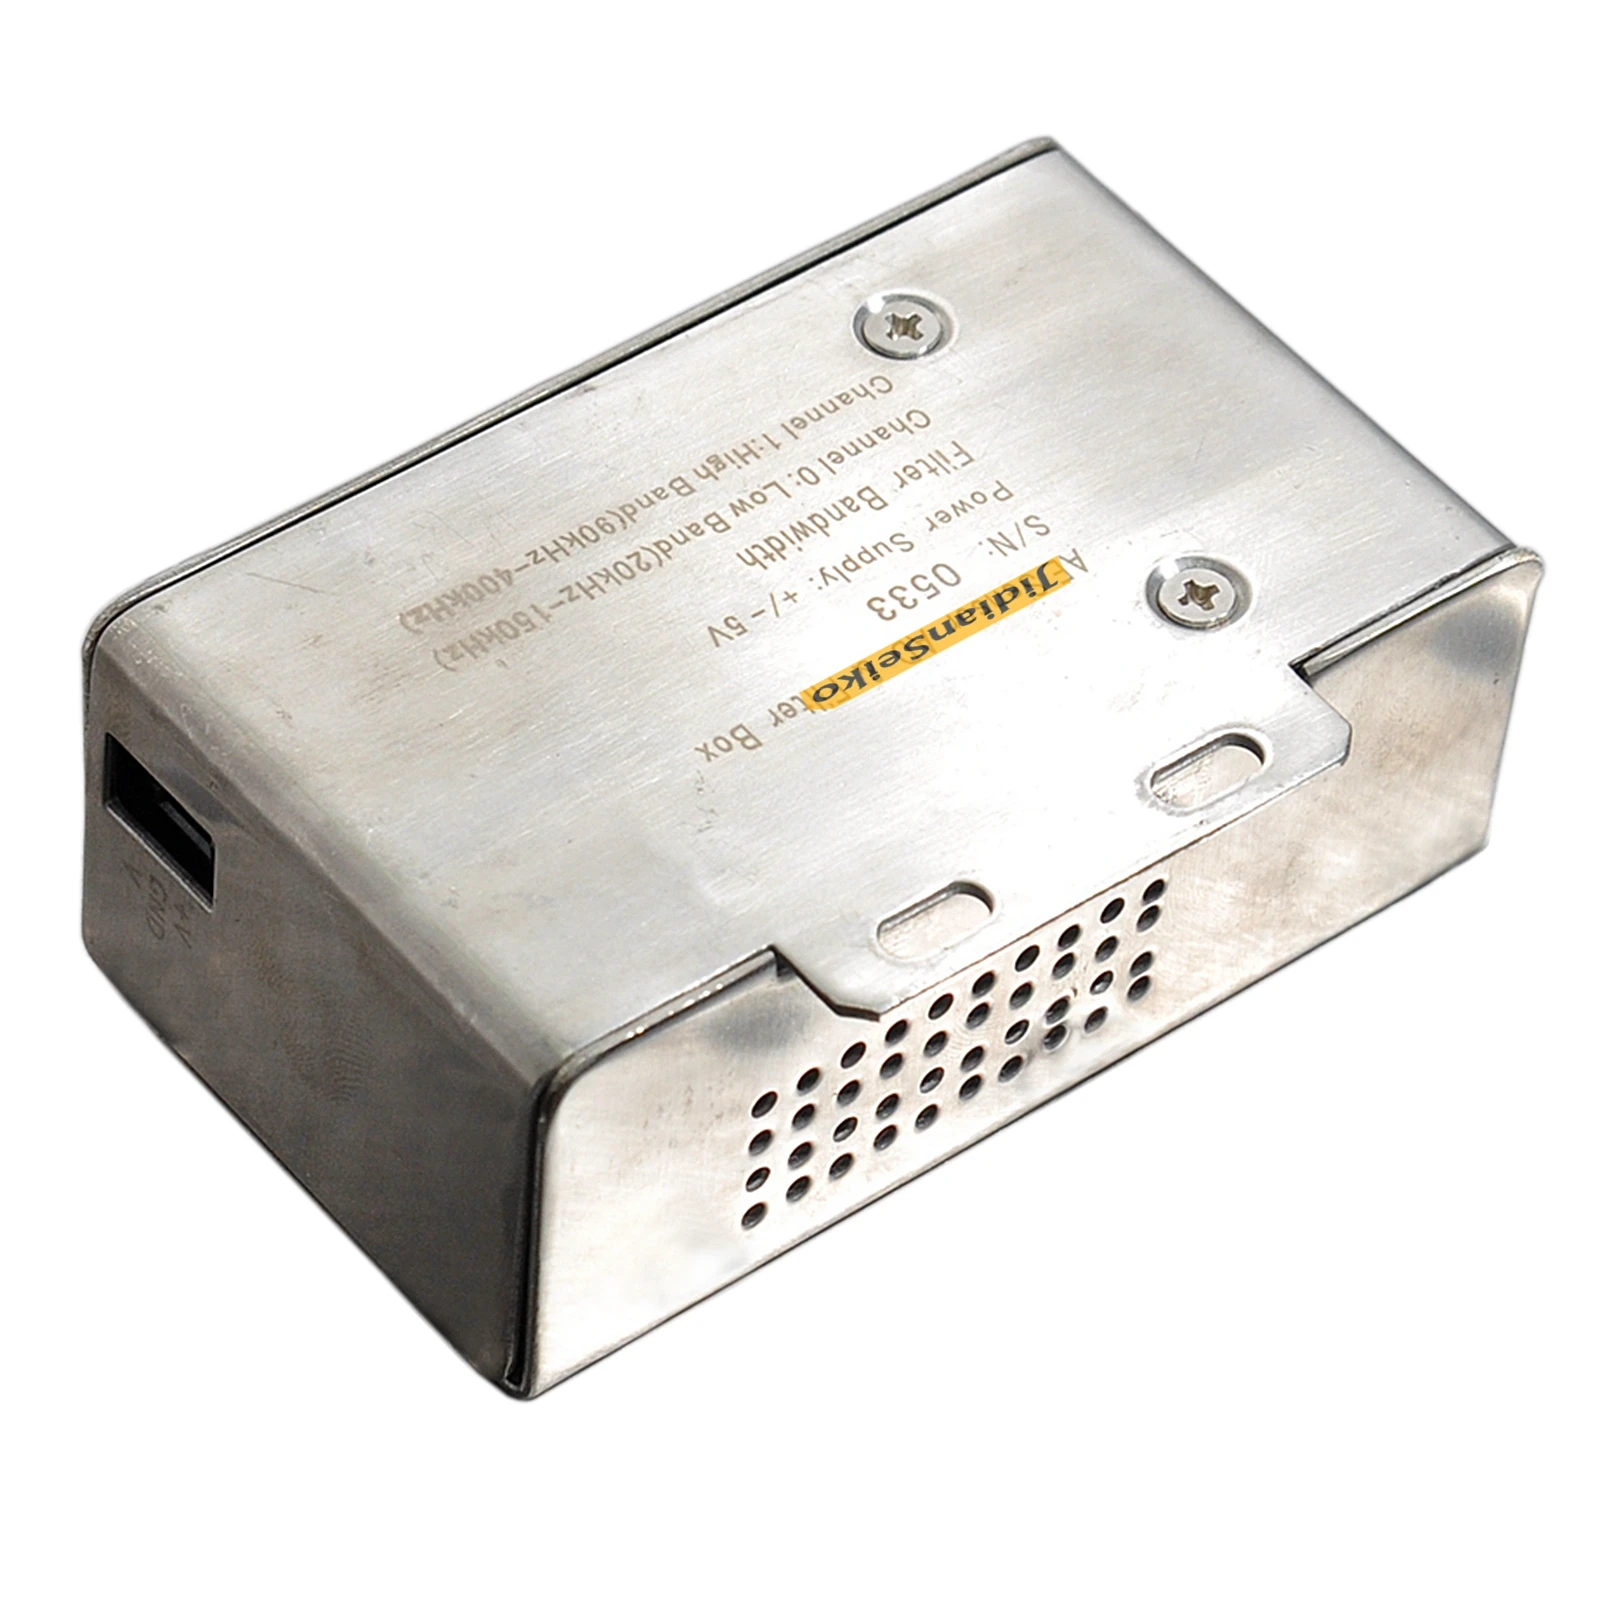 Filter Bandwidth Power-Supply Module 0533 20KHz-150KHz  Sensor AD Box Second Hand images - 6